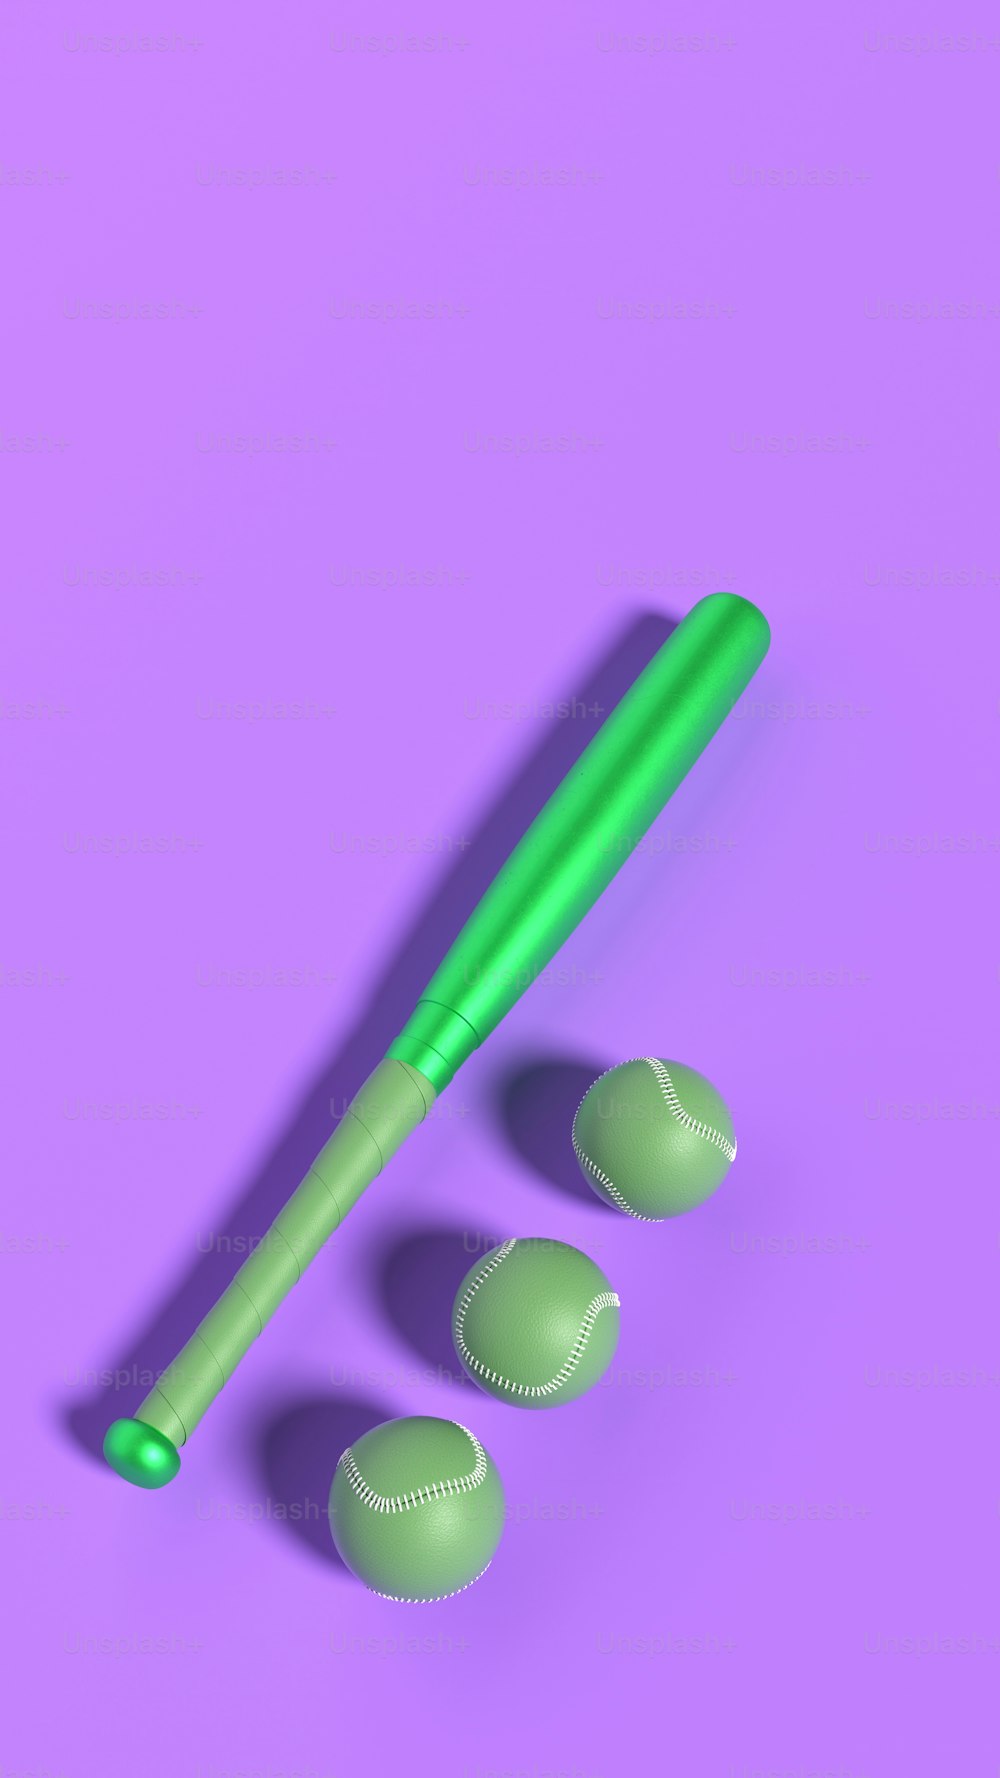 a green plastic baseball bat next to three green plastic caps